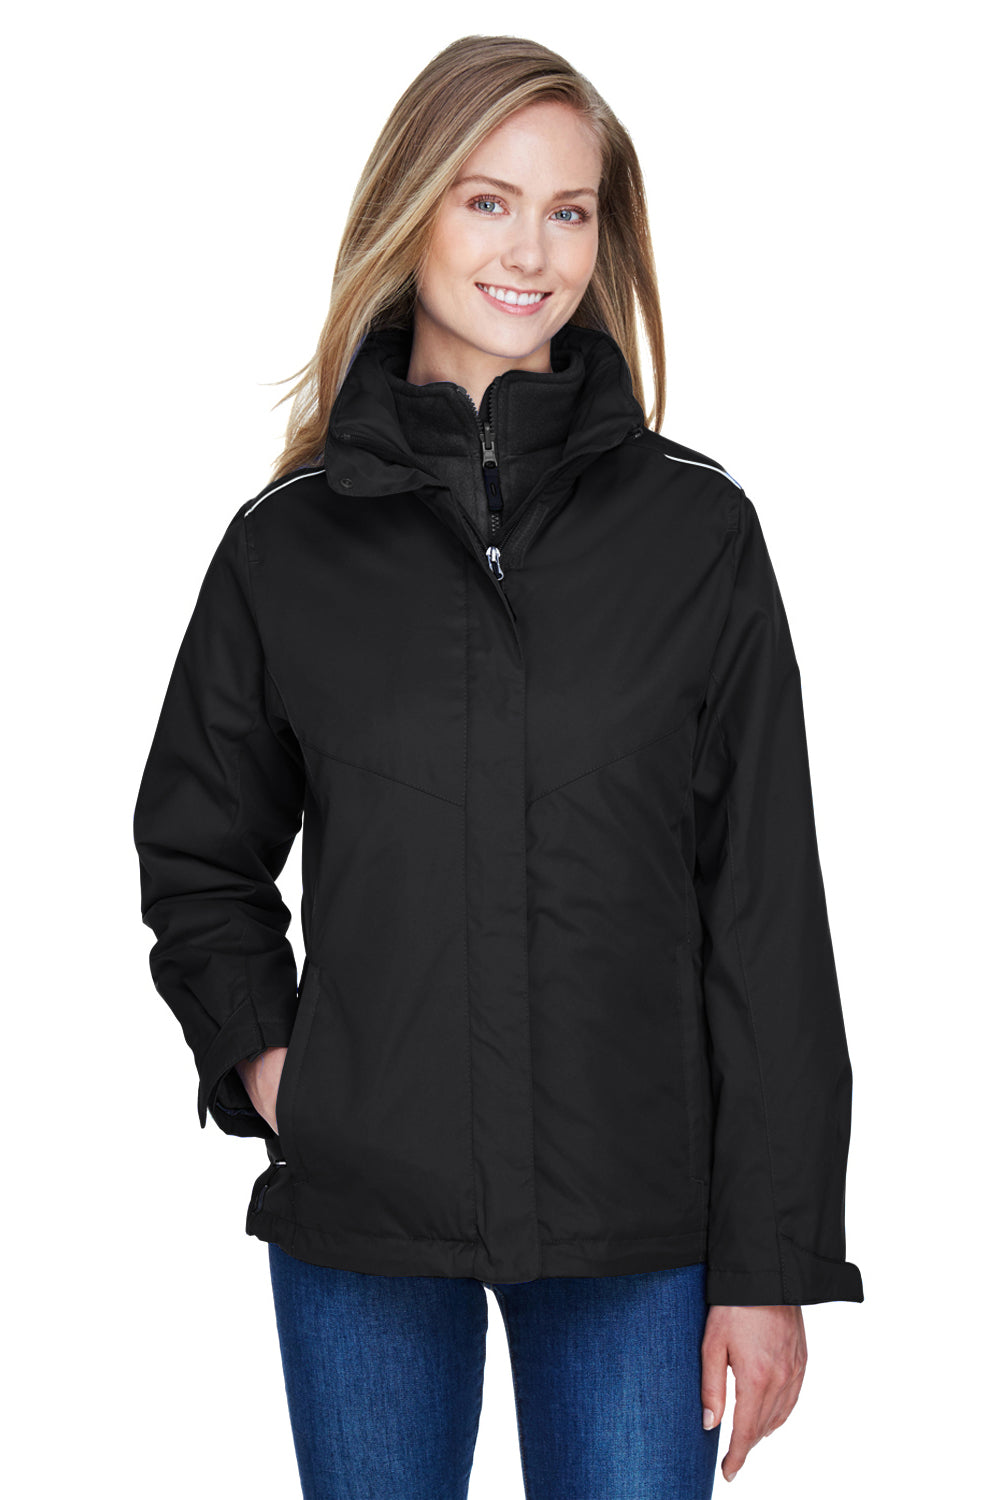 Core 365 78205 Womens Region 3-in-1 Water Resistant Full Zip Hooded Jacket Black Front